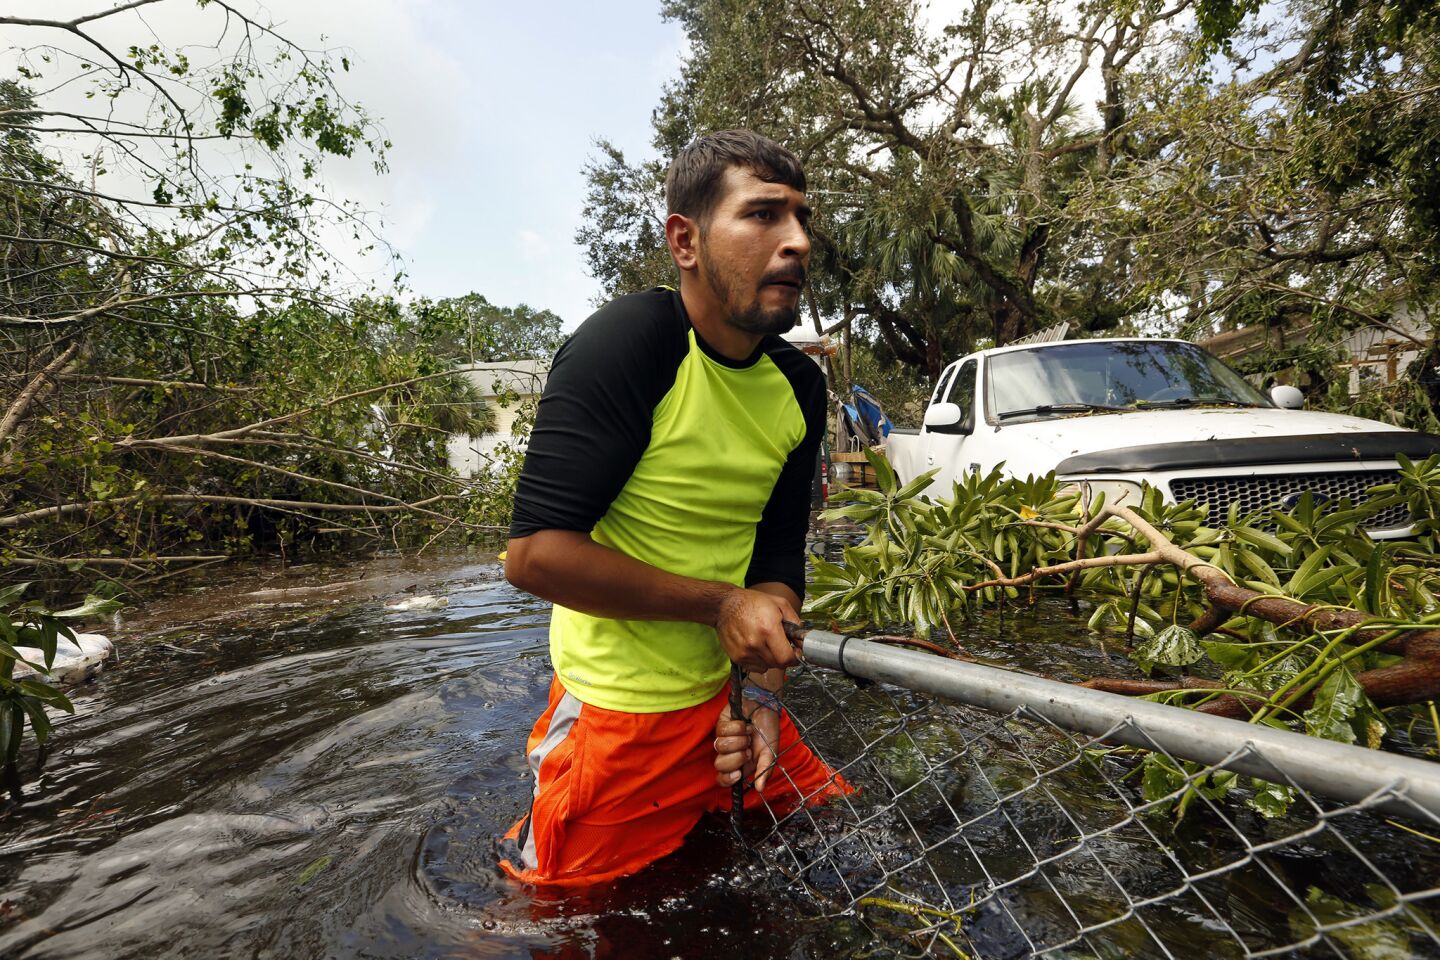 Israel Alvarado, 25, tries to open a gate blocked by fallen tree branches to retrieve a generator in Bonita Springs.